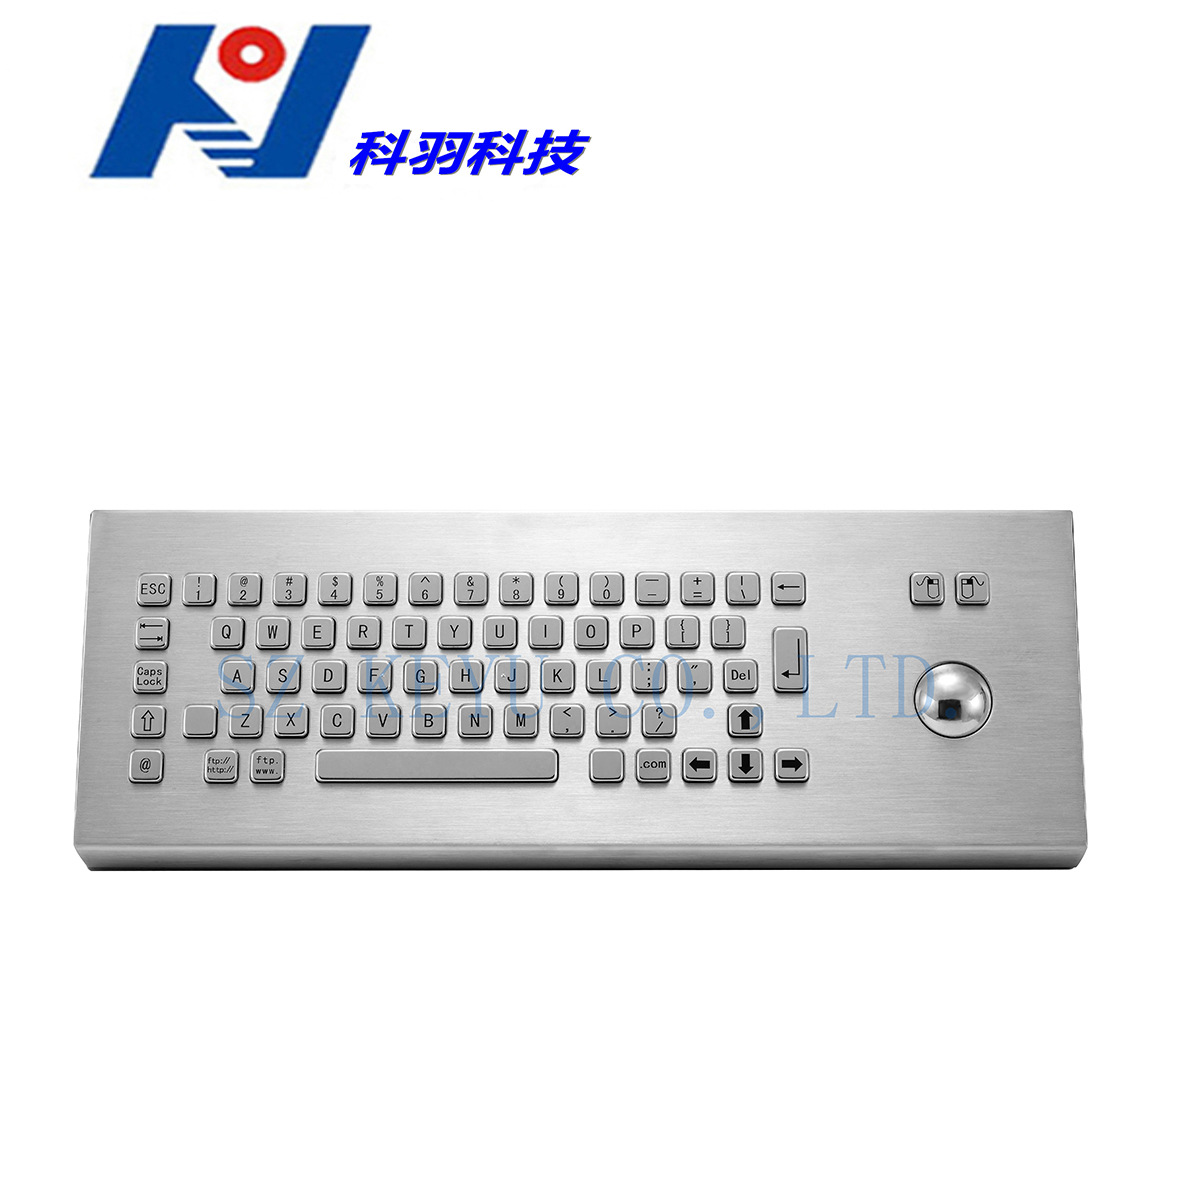 Manufactor supply Desktop Box KY-PC-D-DESK Stainless steel Metal Industry keyboard